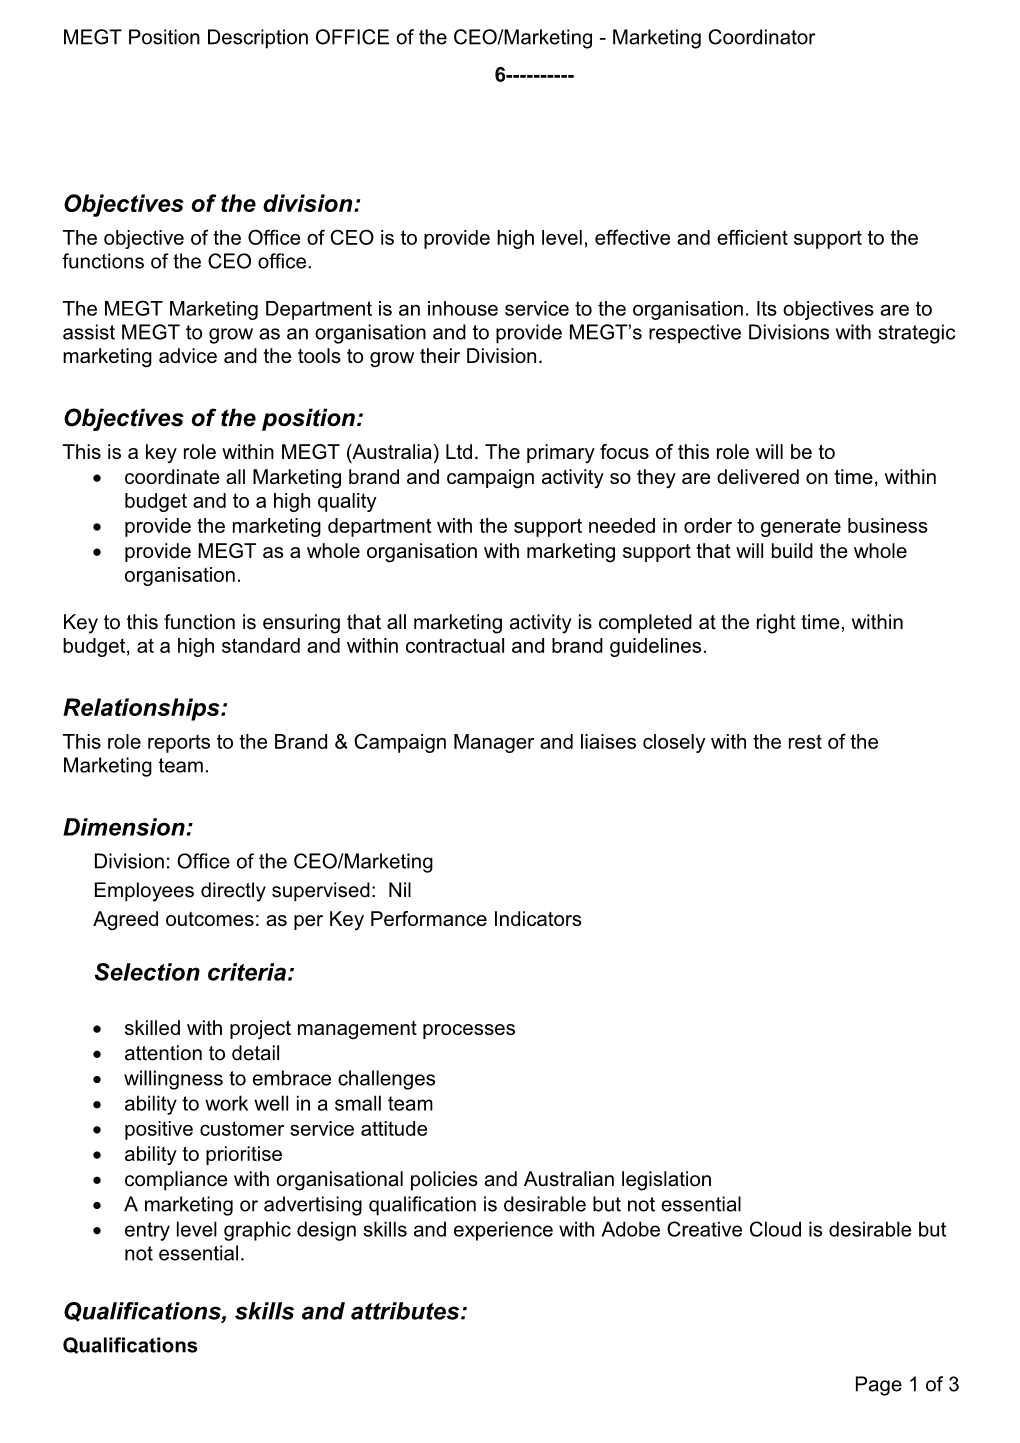 MEGT Position Description OFFICE of the CEO/Marketing - Marketing Coordinator